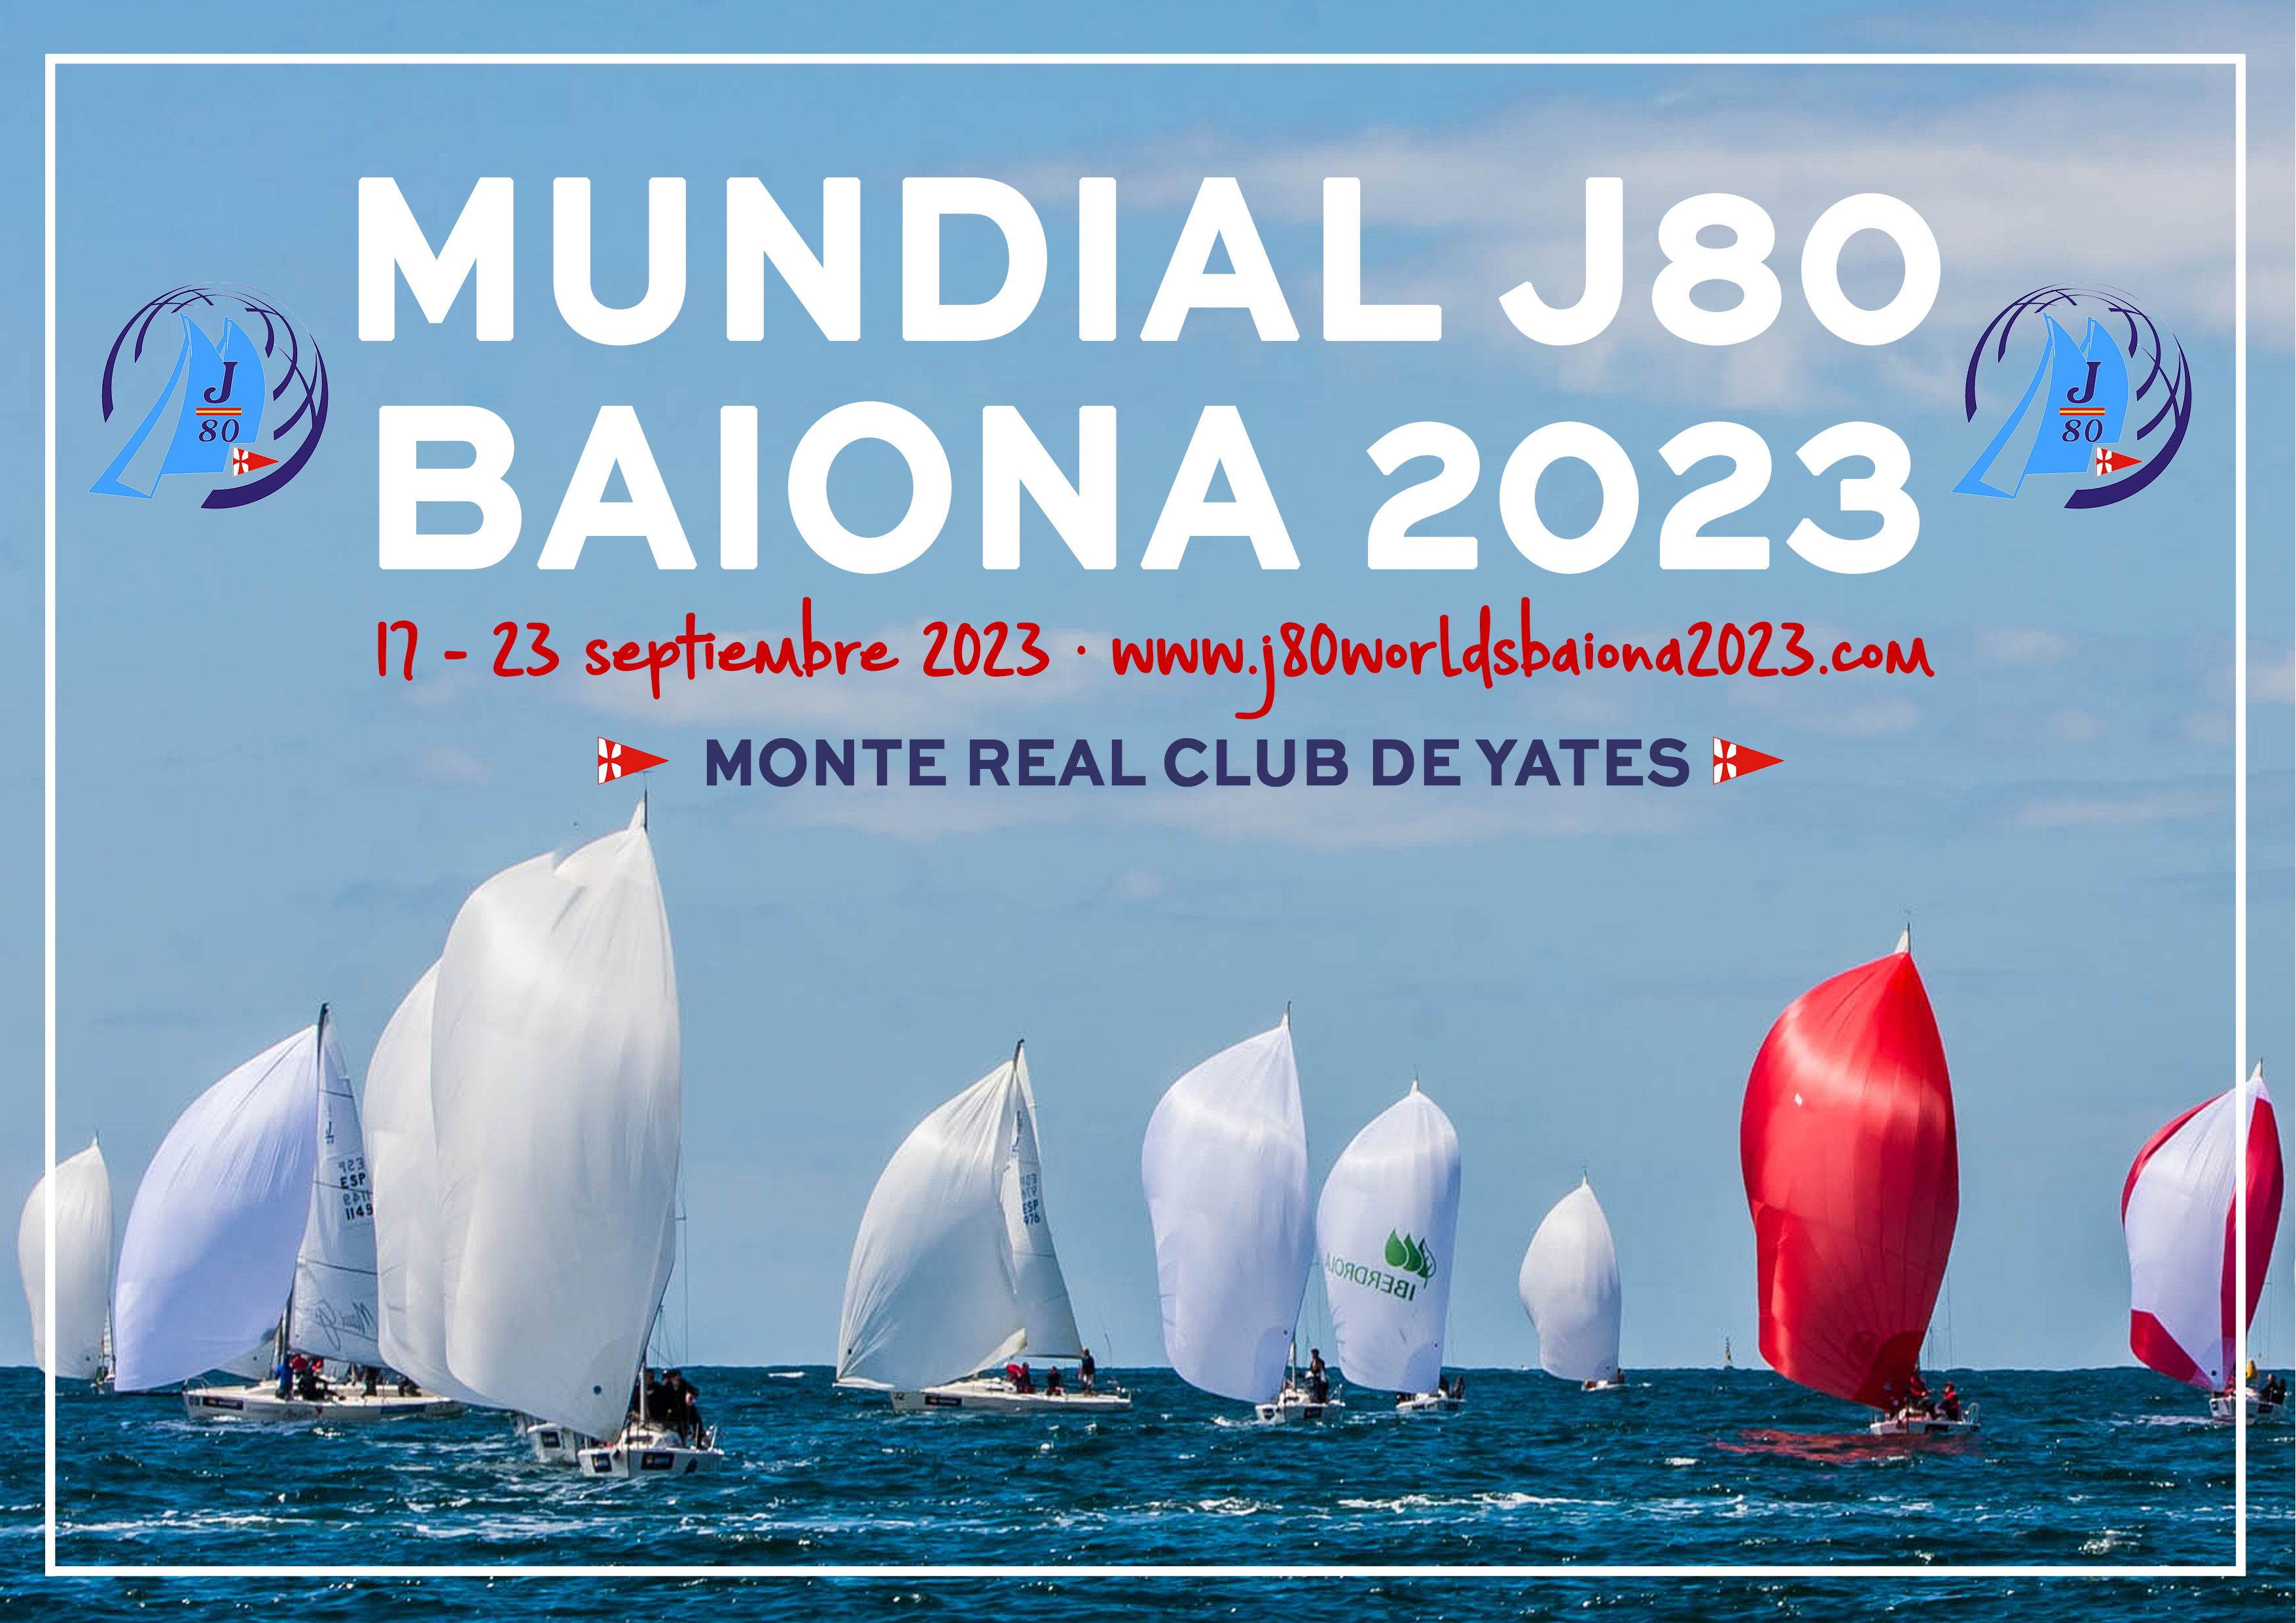 Baiona will host the J80 class sailing World Championship in 2023 · Monte Real Club de Yates Baiona